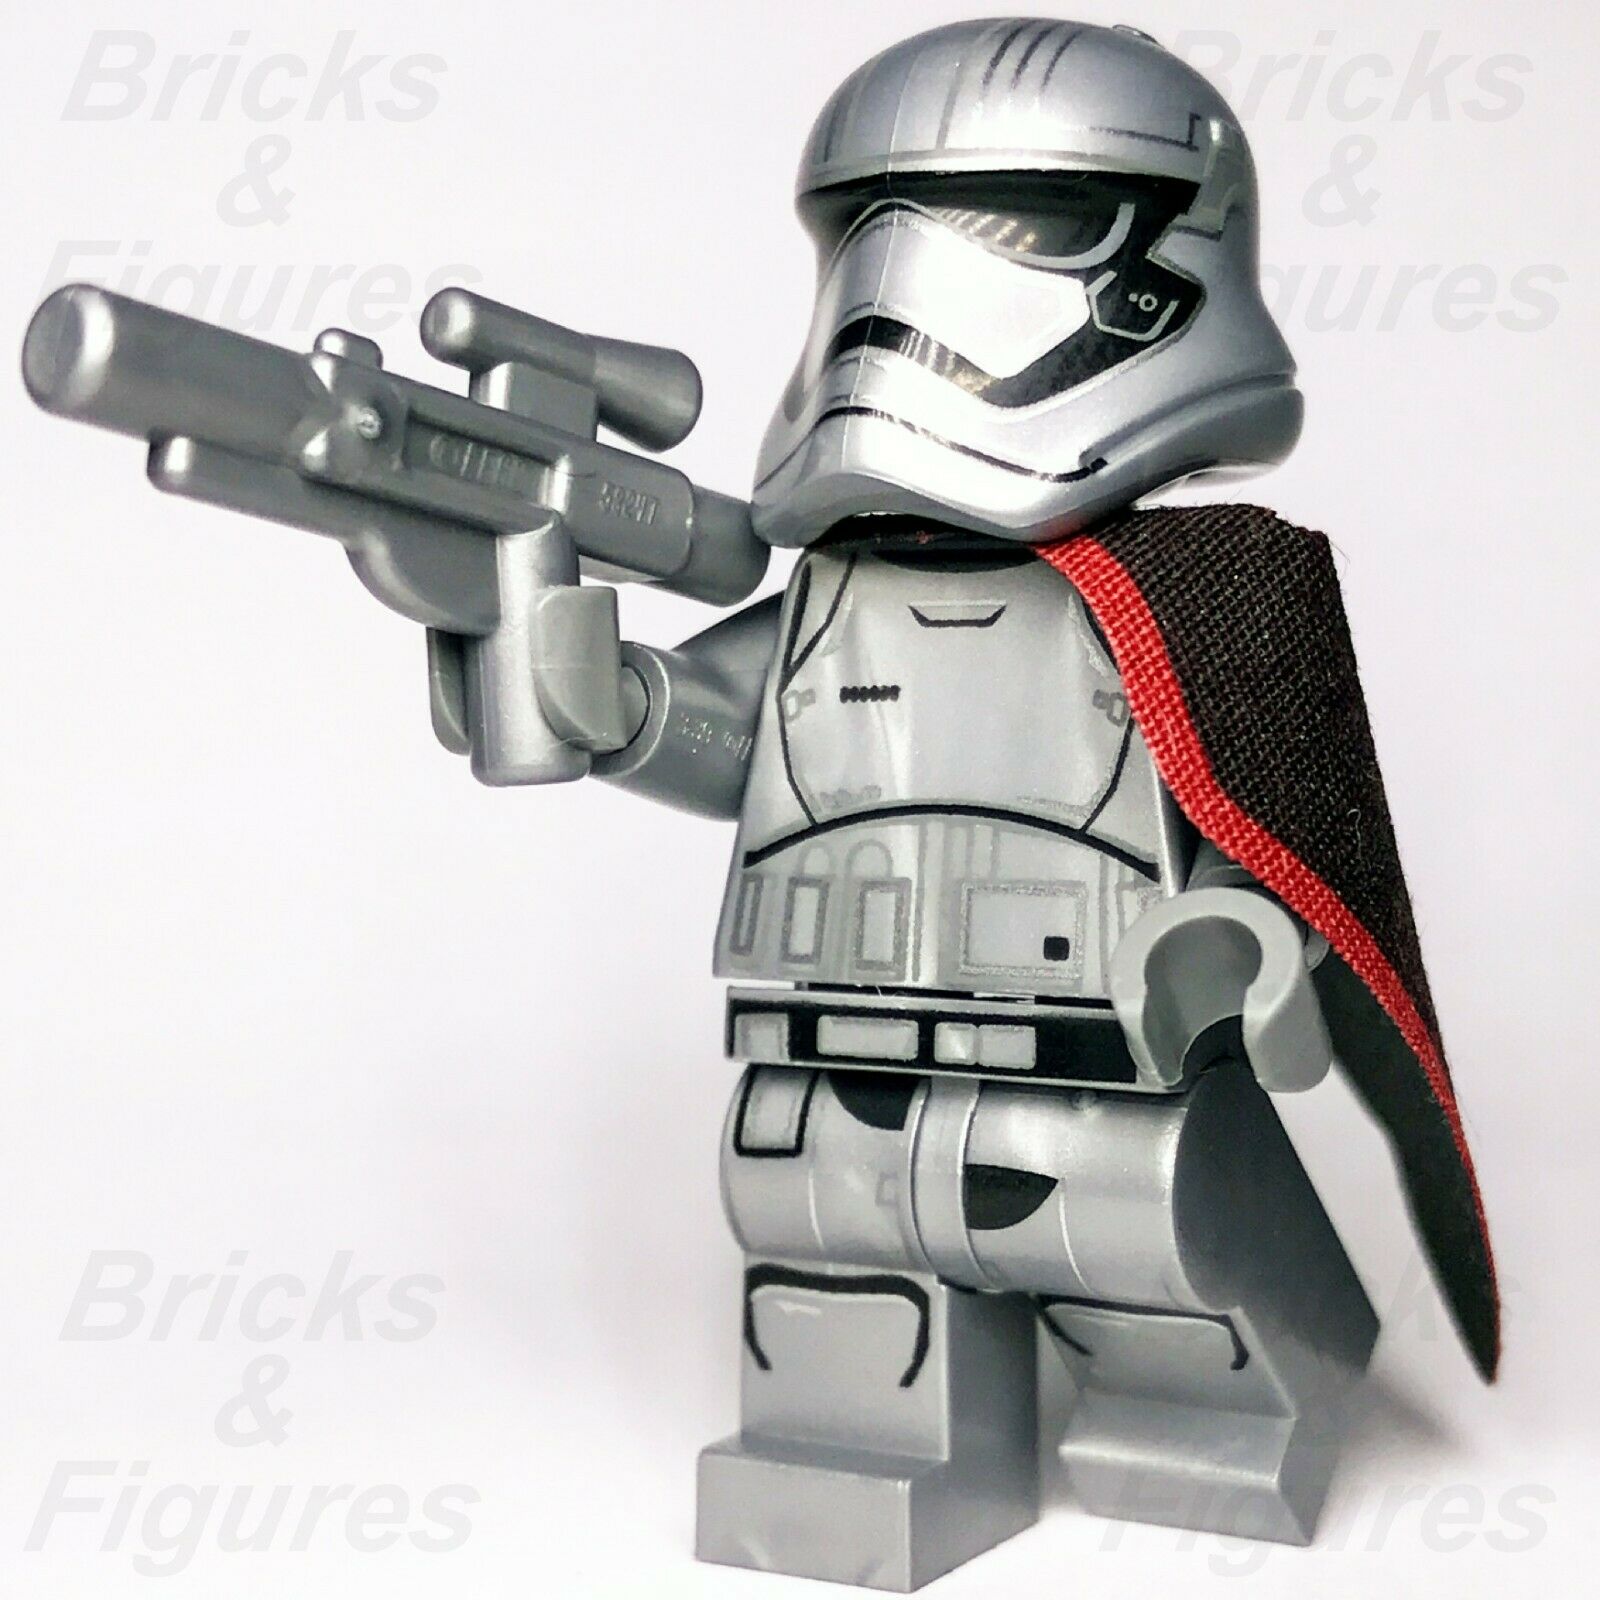 New Star Wars LEGO Captain Phasma First Order Stormtrooper Minifigure 75103 - Bricks & Figures